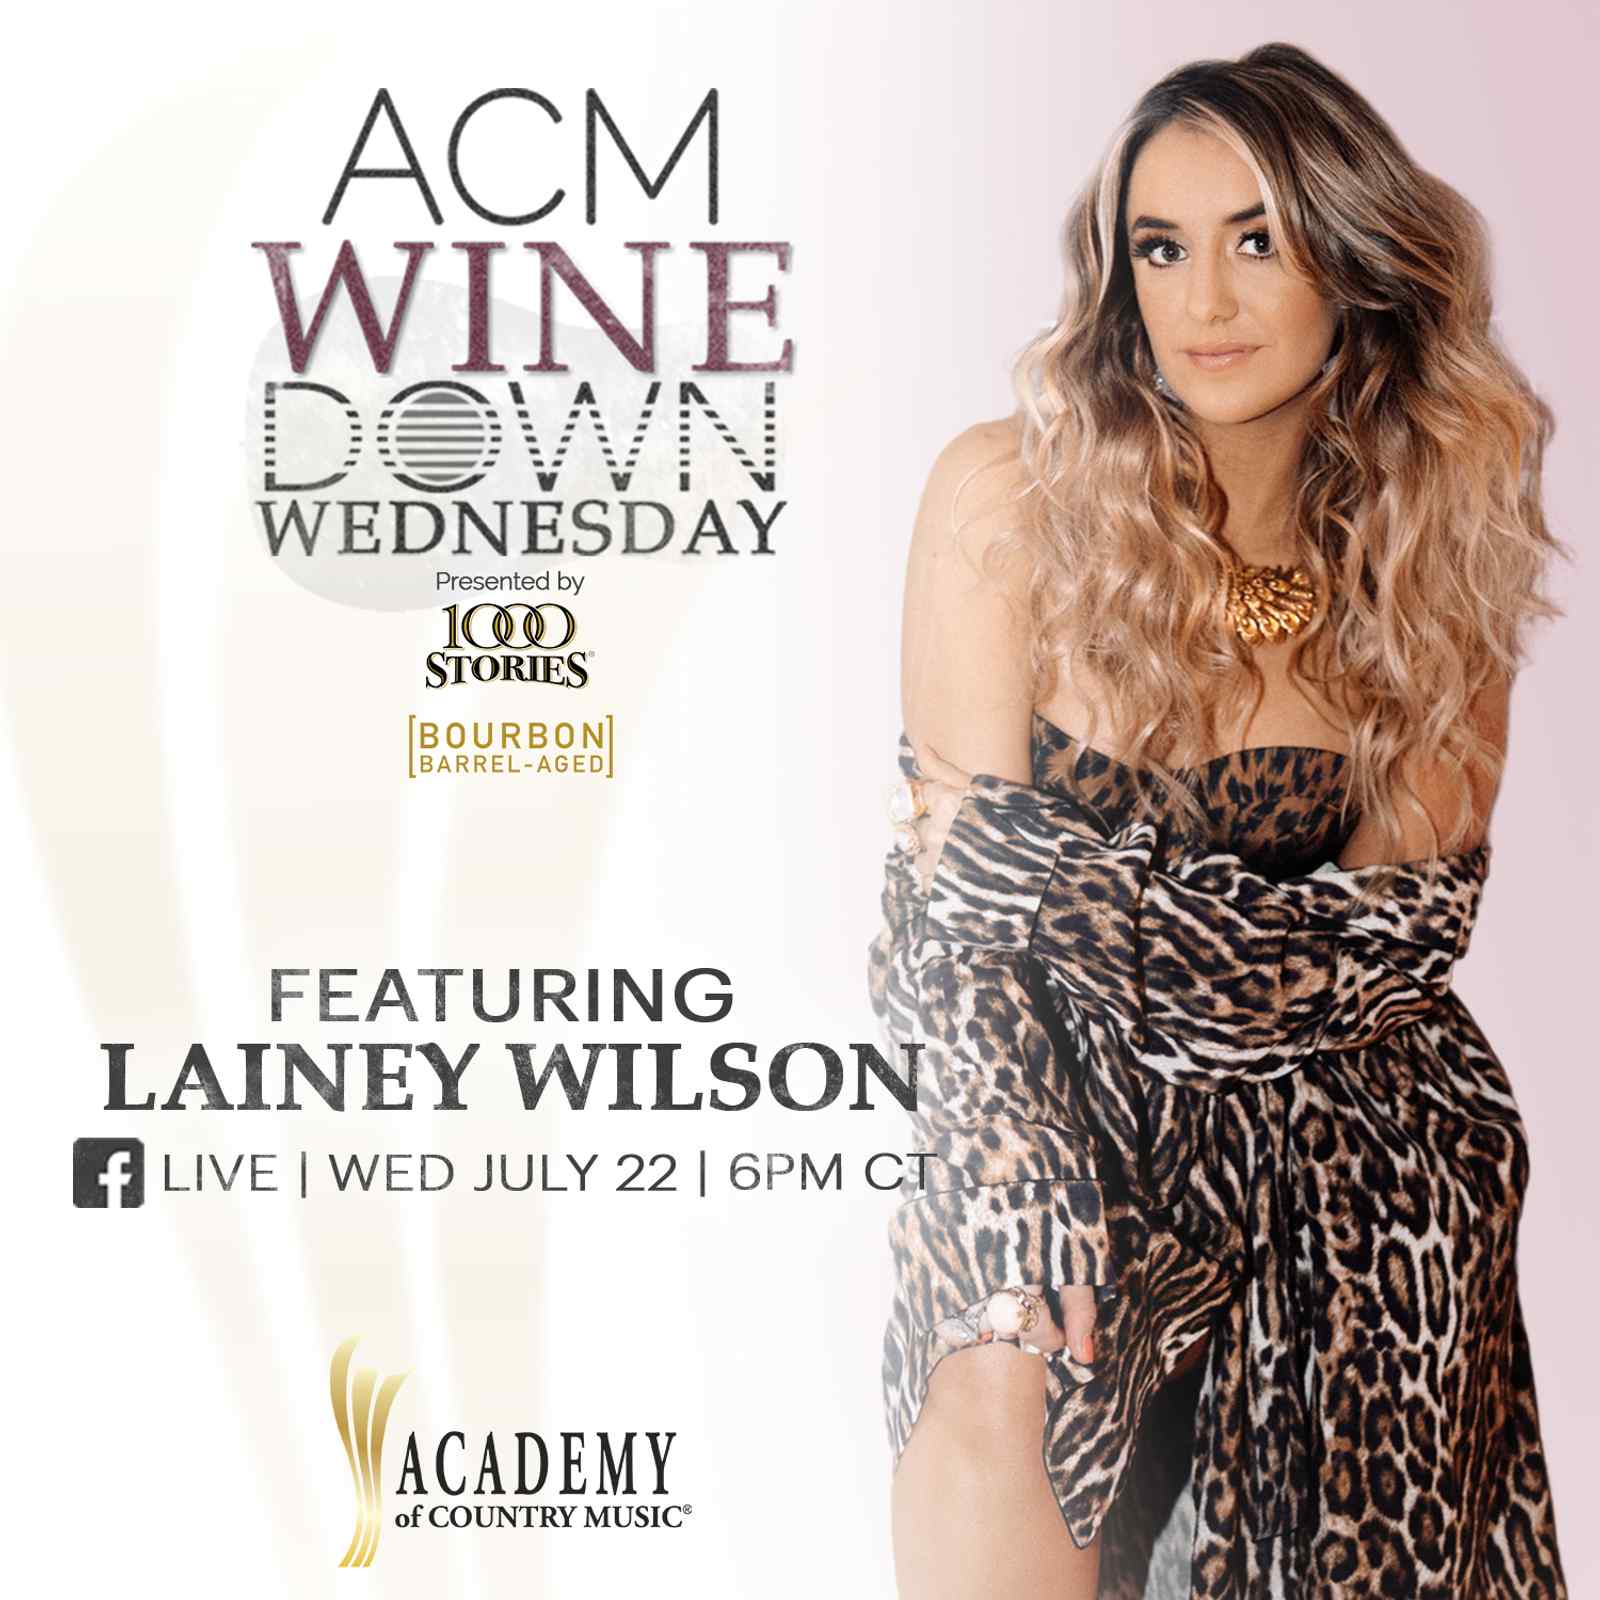 ACM Wine Down Wednesday with Lainey Wilson